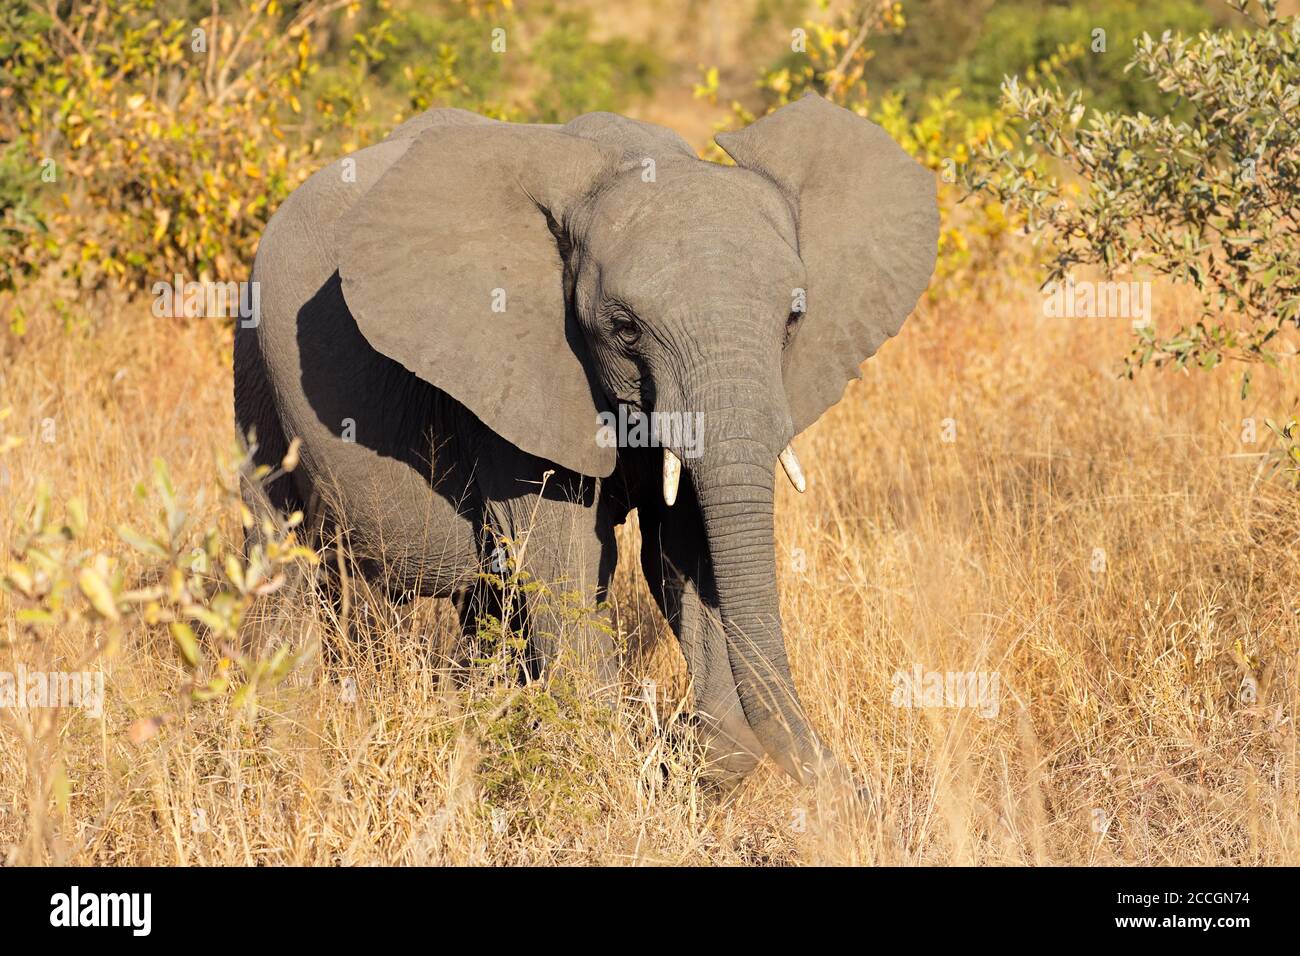 Un elefante africano joven (Loxodonta africana) en el hábitat natural, Parque Nacional Kruger, Sudáfrica Foto de stock